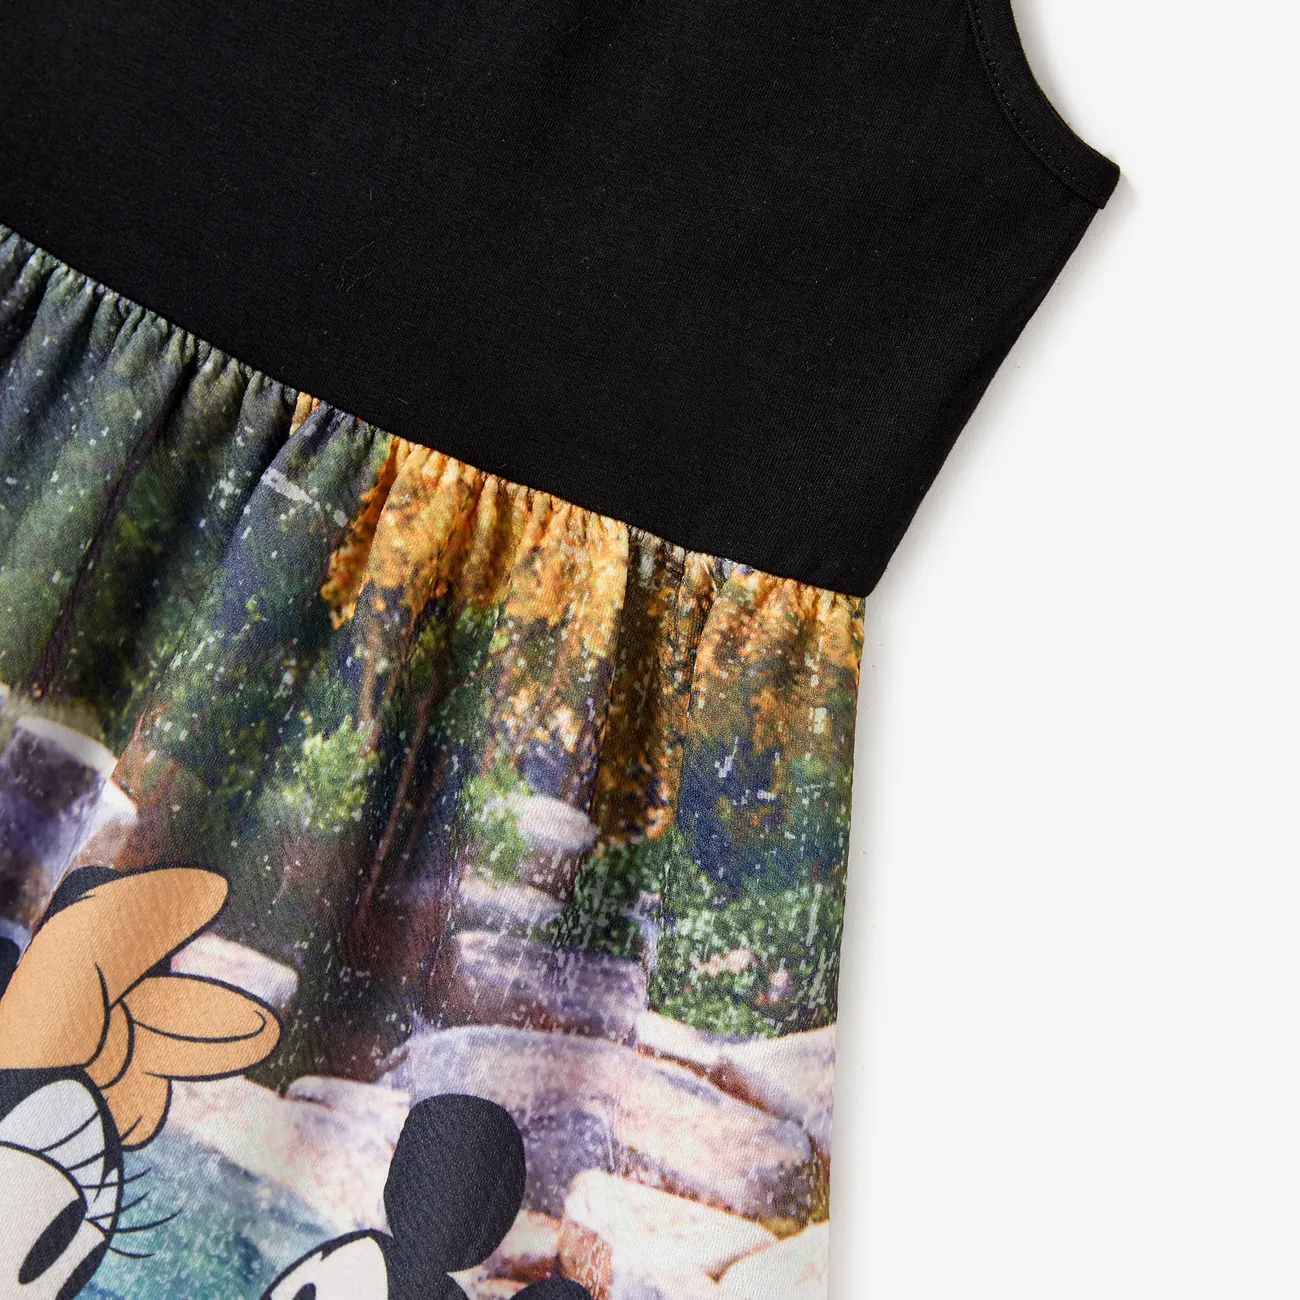 Disney Mickey and Friends Family Matching Naia™ Character Print Bowknot Cotton T-shirt/Dress/Short-sleeve Romper Black big image 1